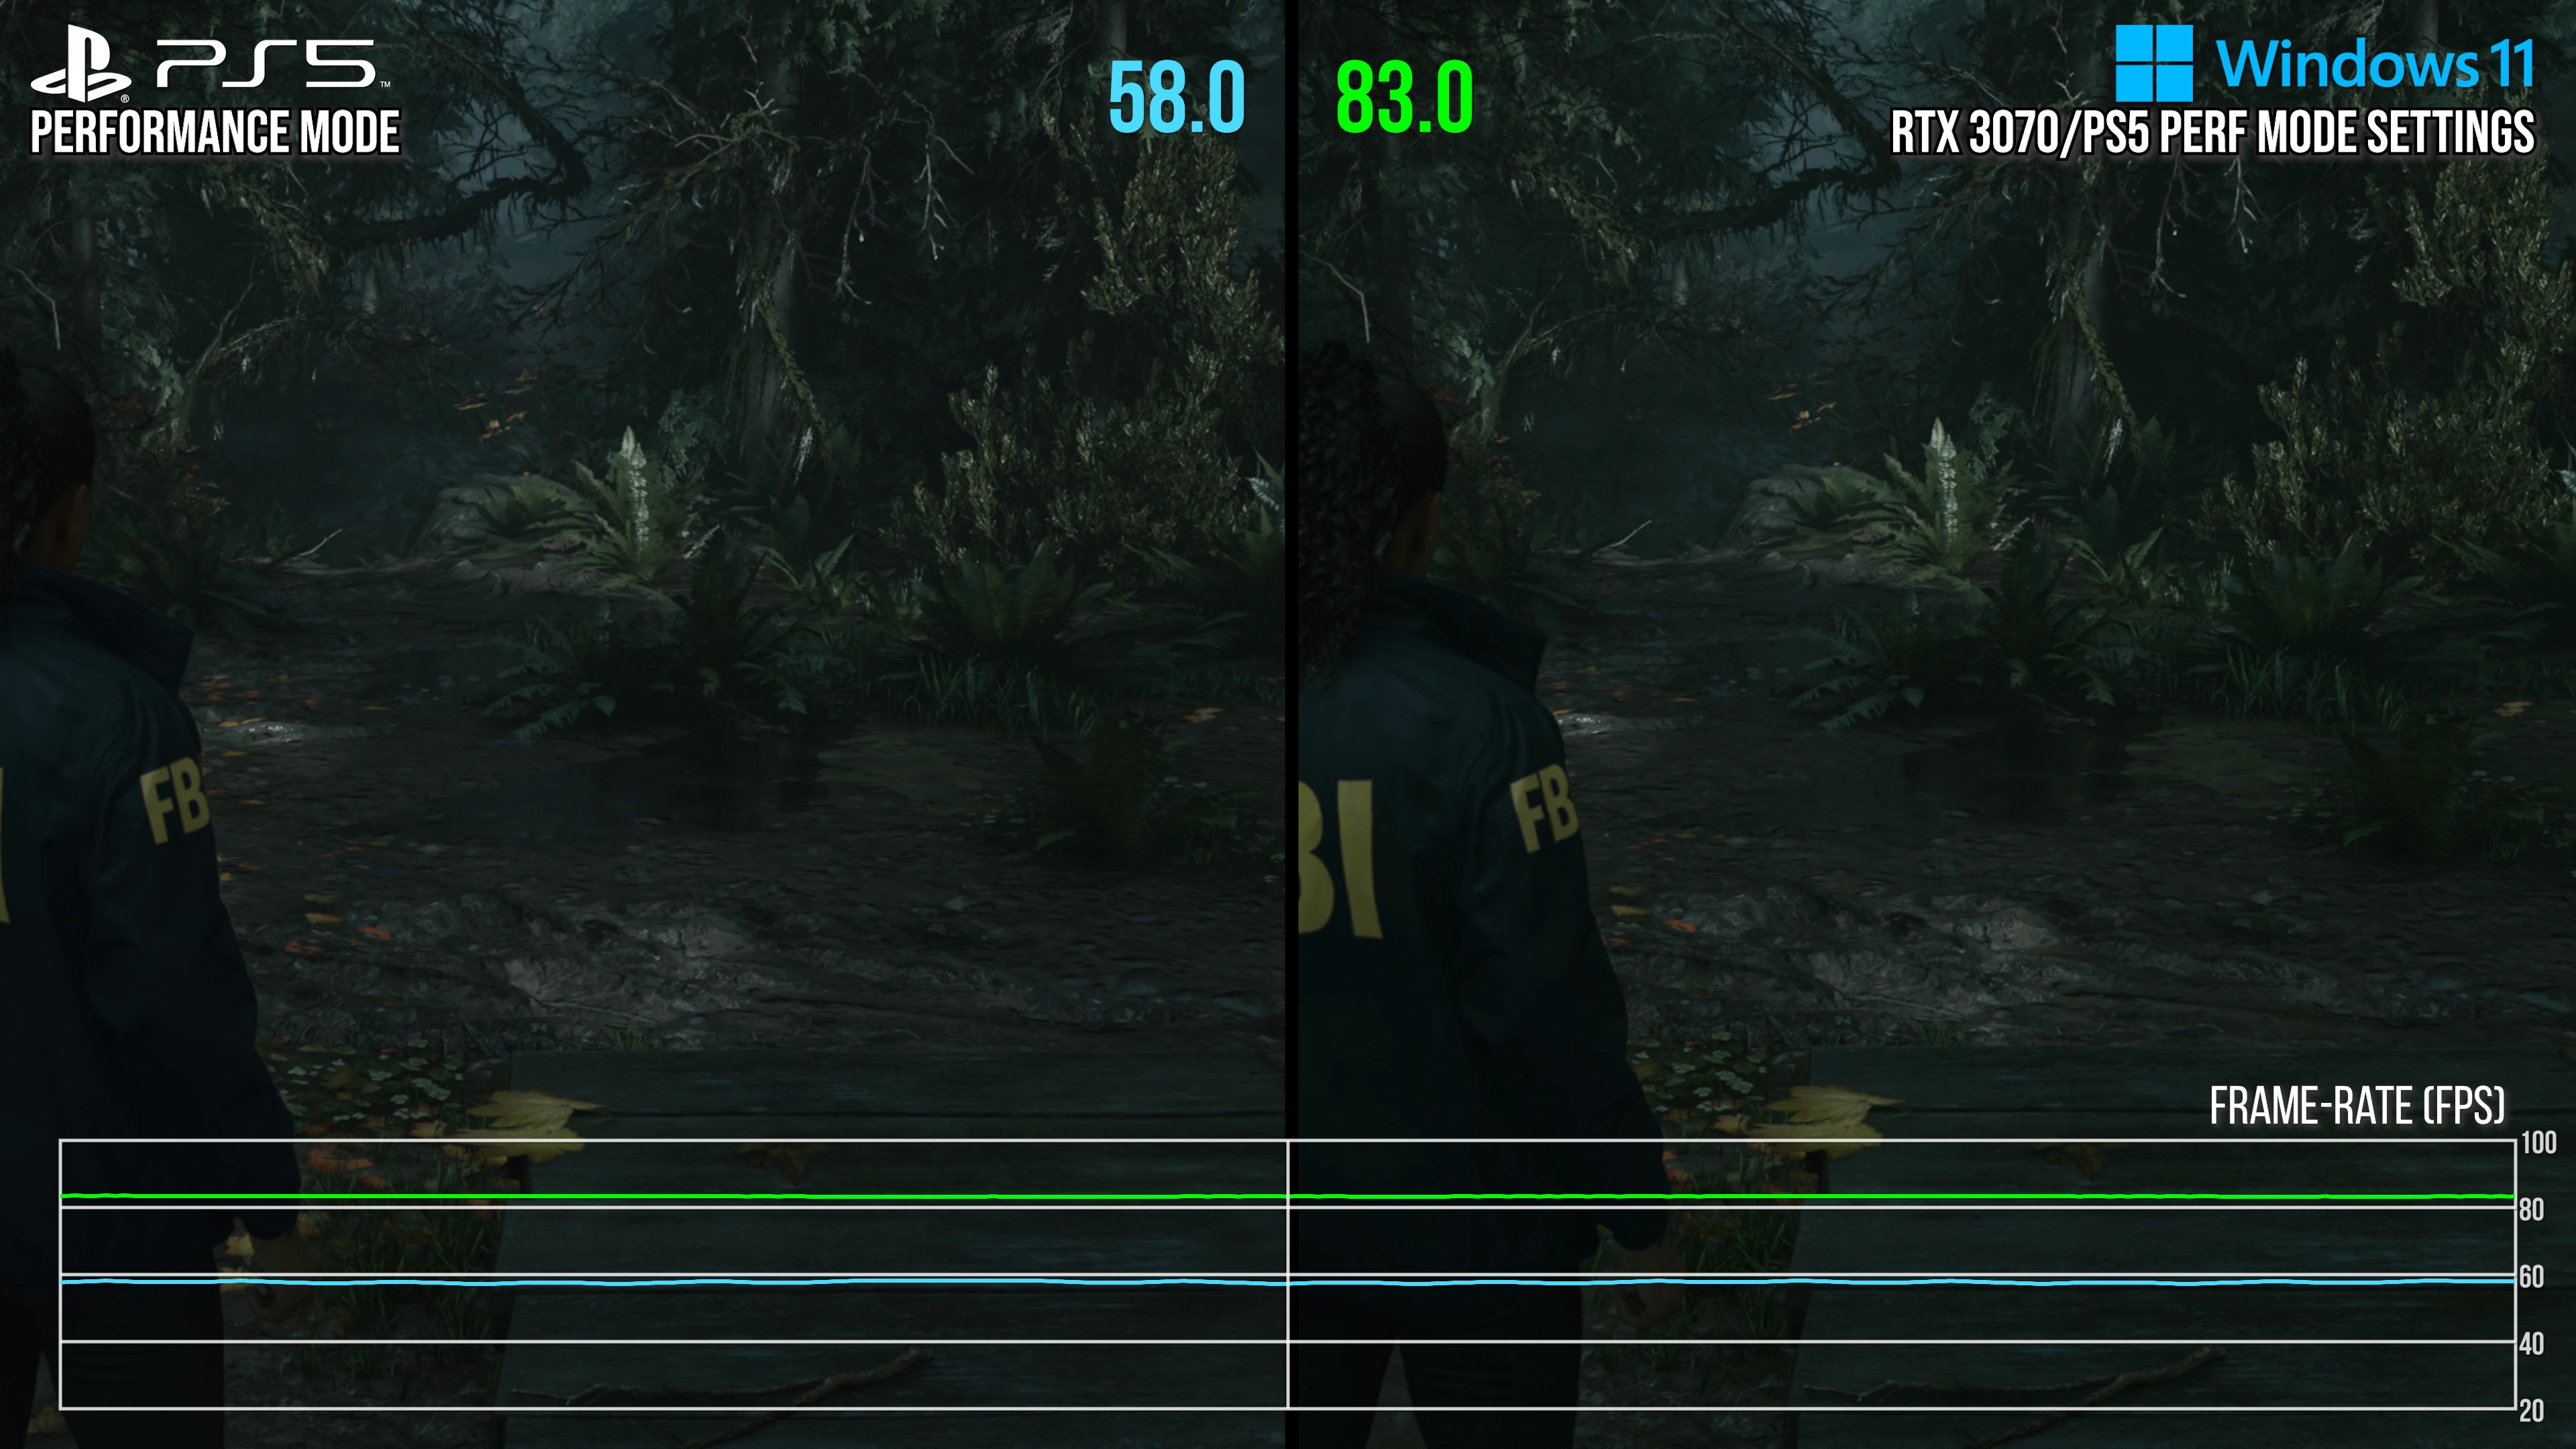 Alan Wake 2 precisa de RTX 3070 para rodar a 1080p e 60 FPS - Adrenaline